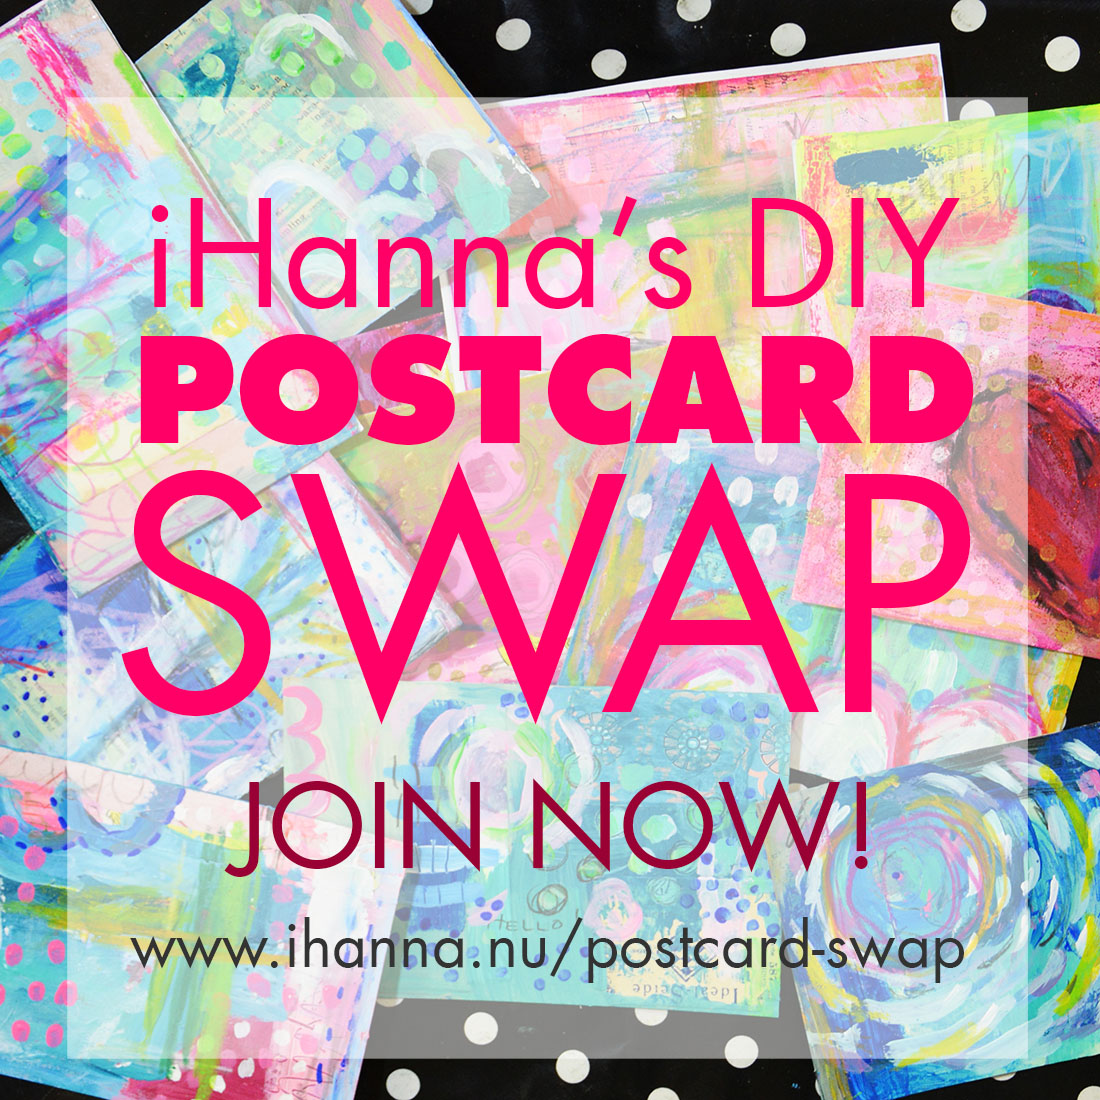 iHanna's DIY Postcard Swap - Join now! #ihannaspostcardswap